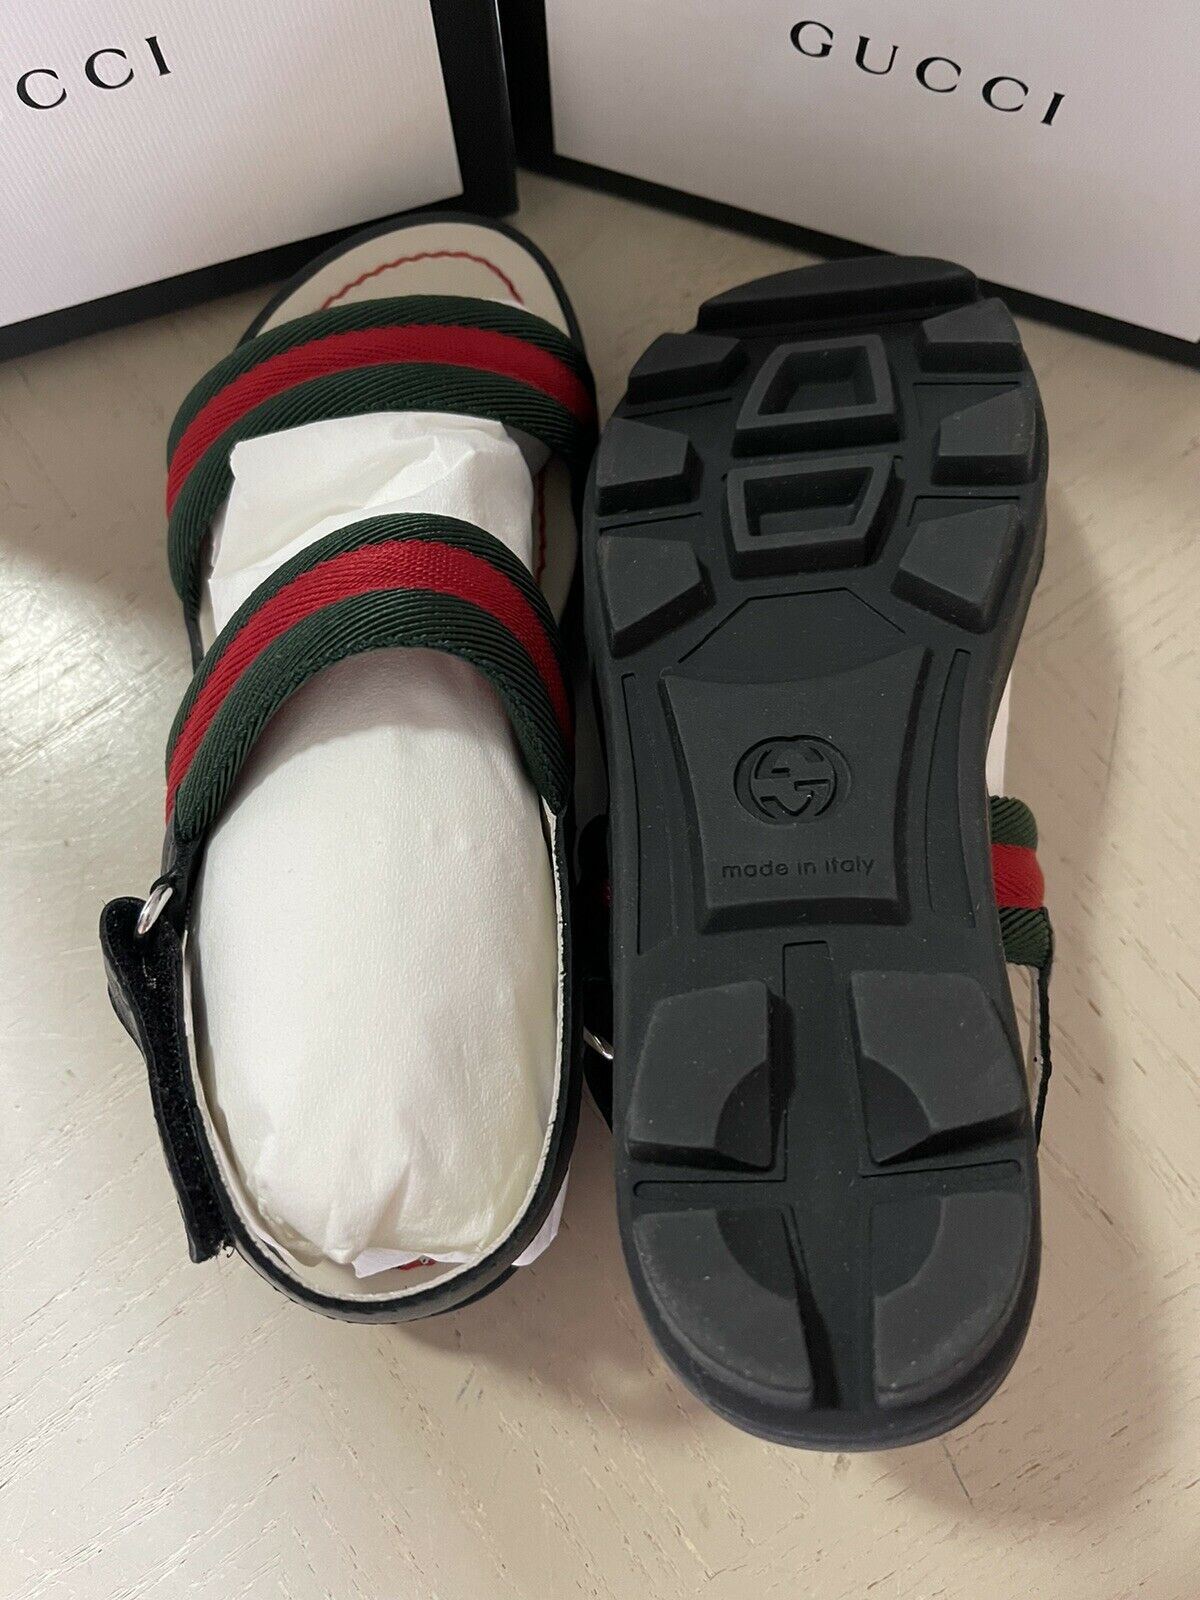 NIB Gucci Kids Canvas/Leather Sandal Shoes Black/Red Size 32/1L US Age 6.5